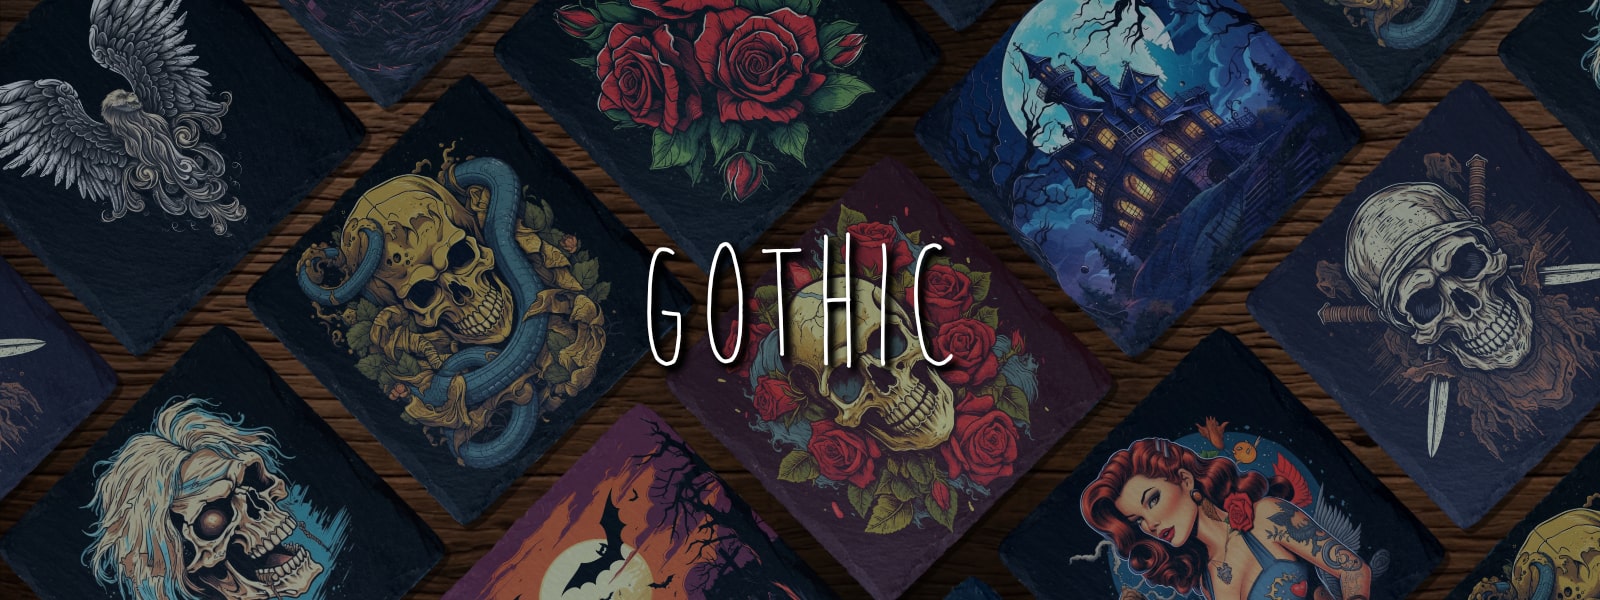 Halloween & Gothic Slate Coasters - GameOn.games